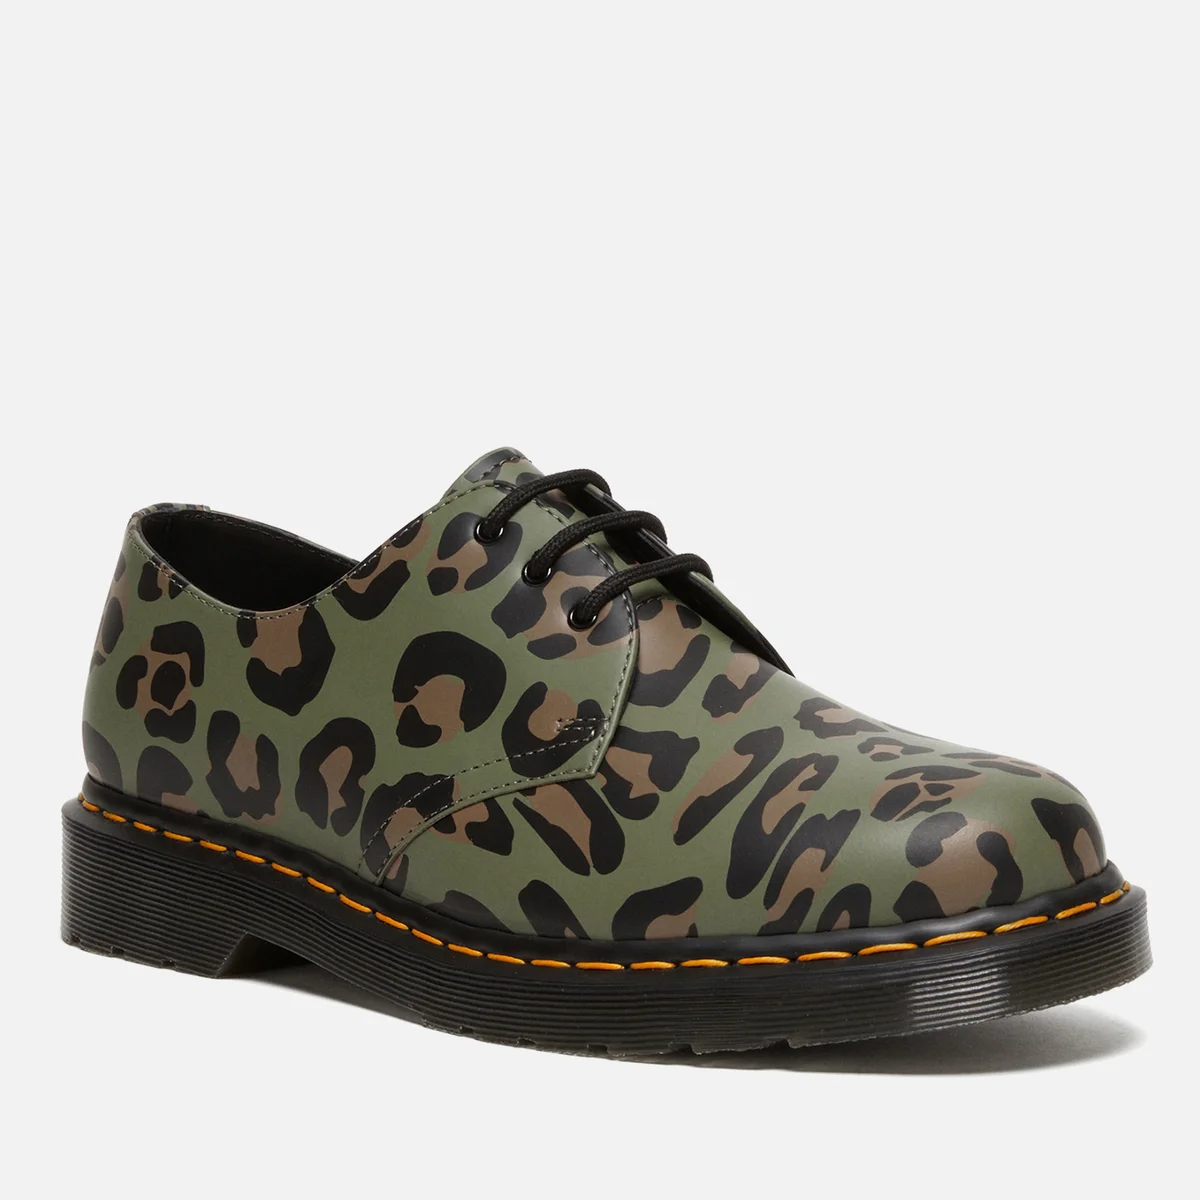 Dr. Martens 1461 Leopard-Print Leather Shoes Image 1